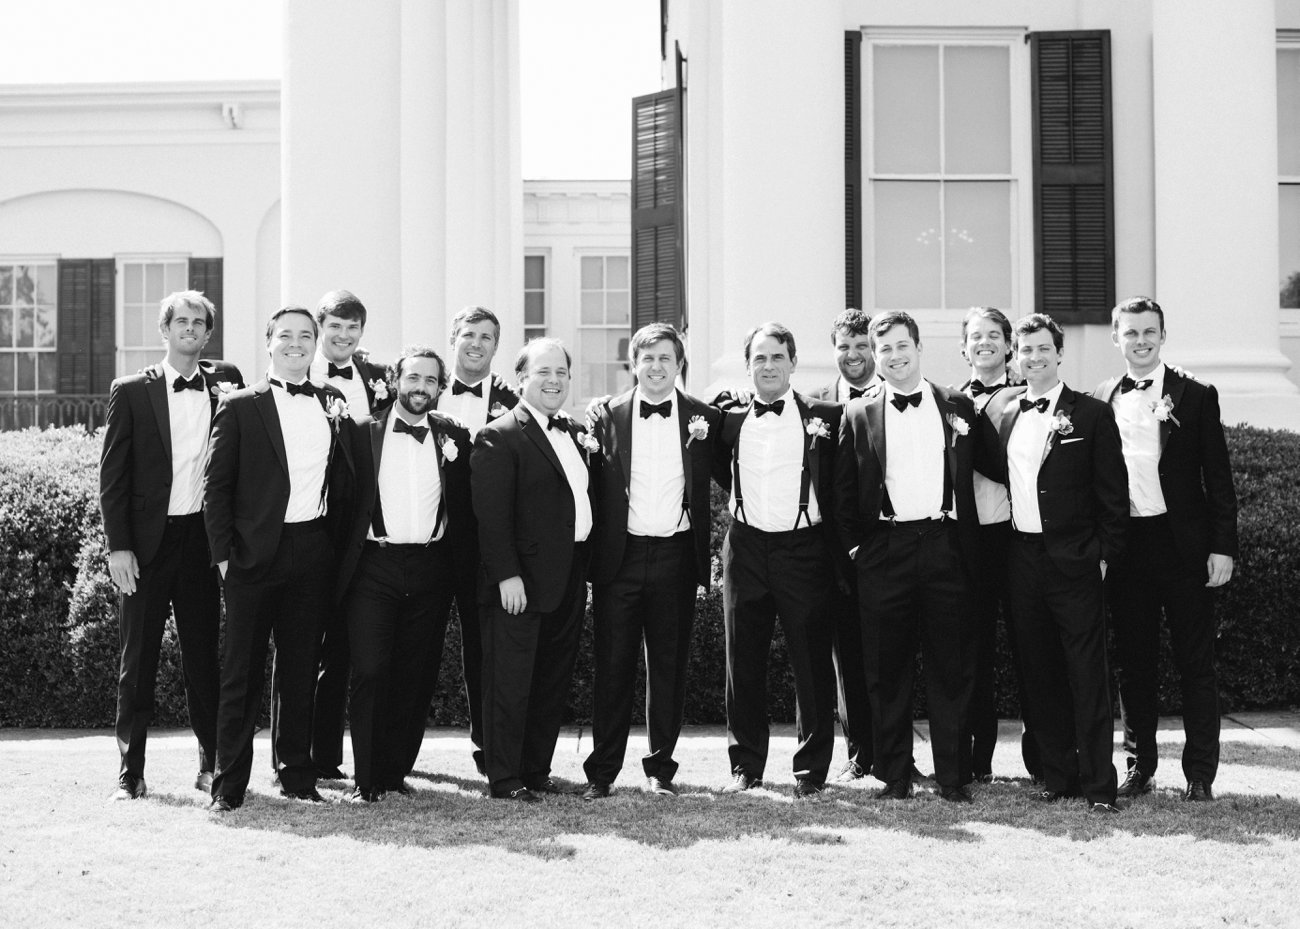 Classic groomsmen photo in black and white